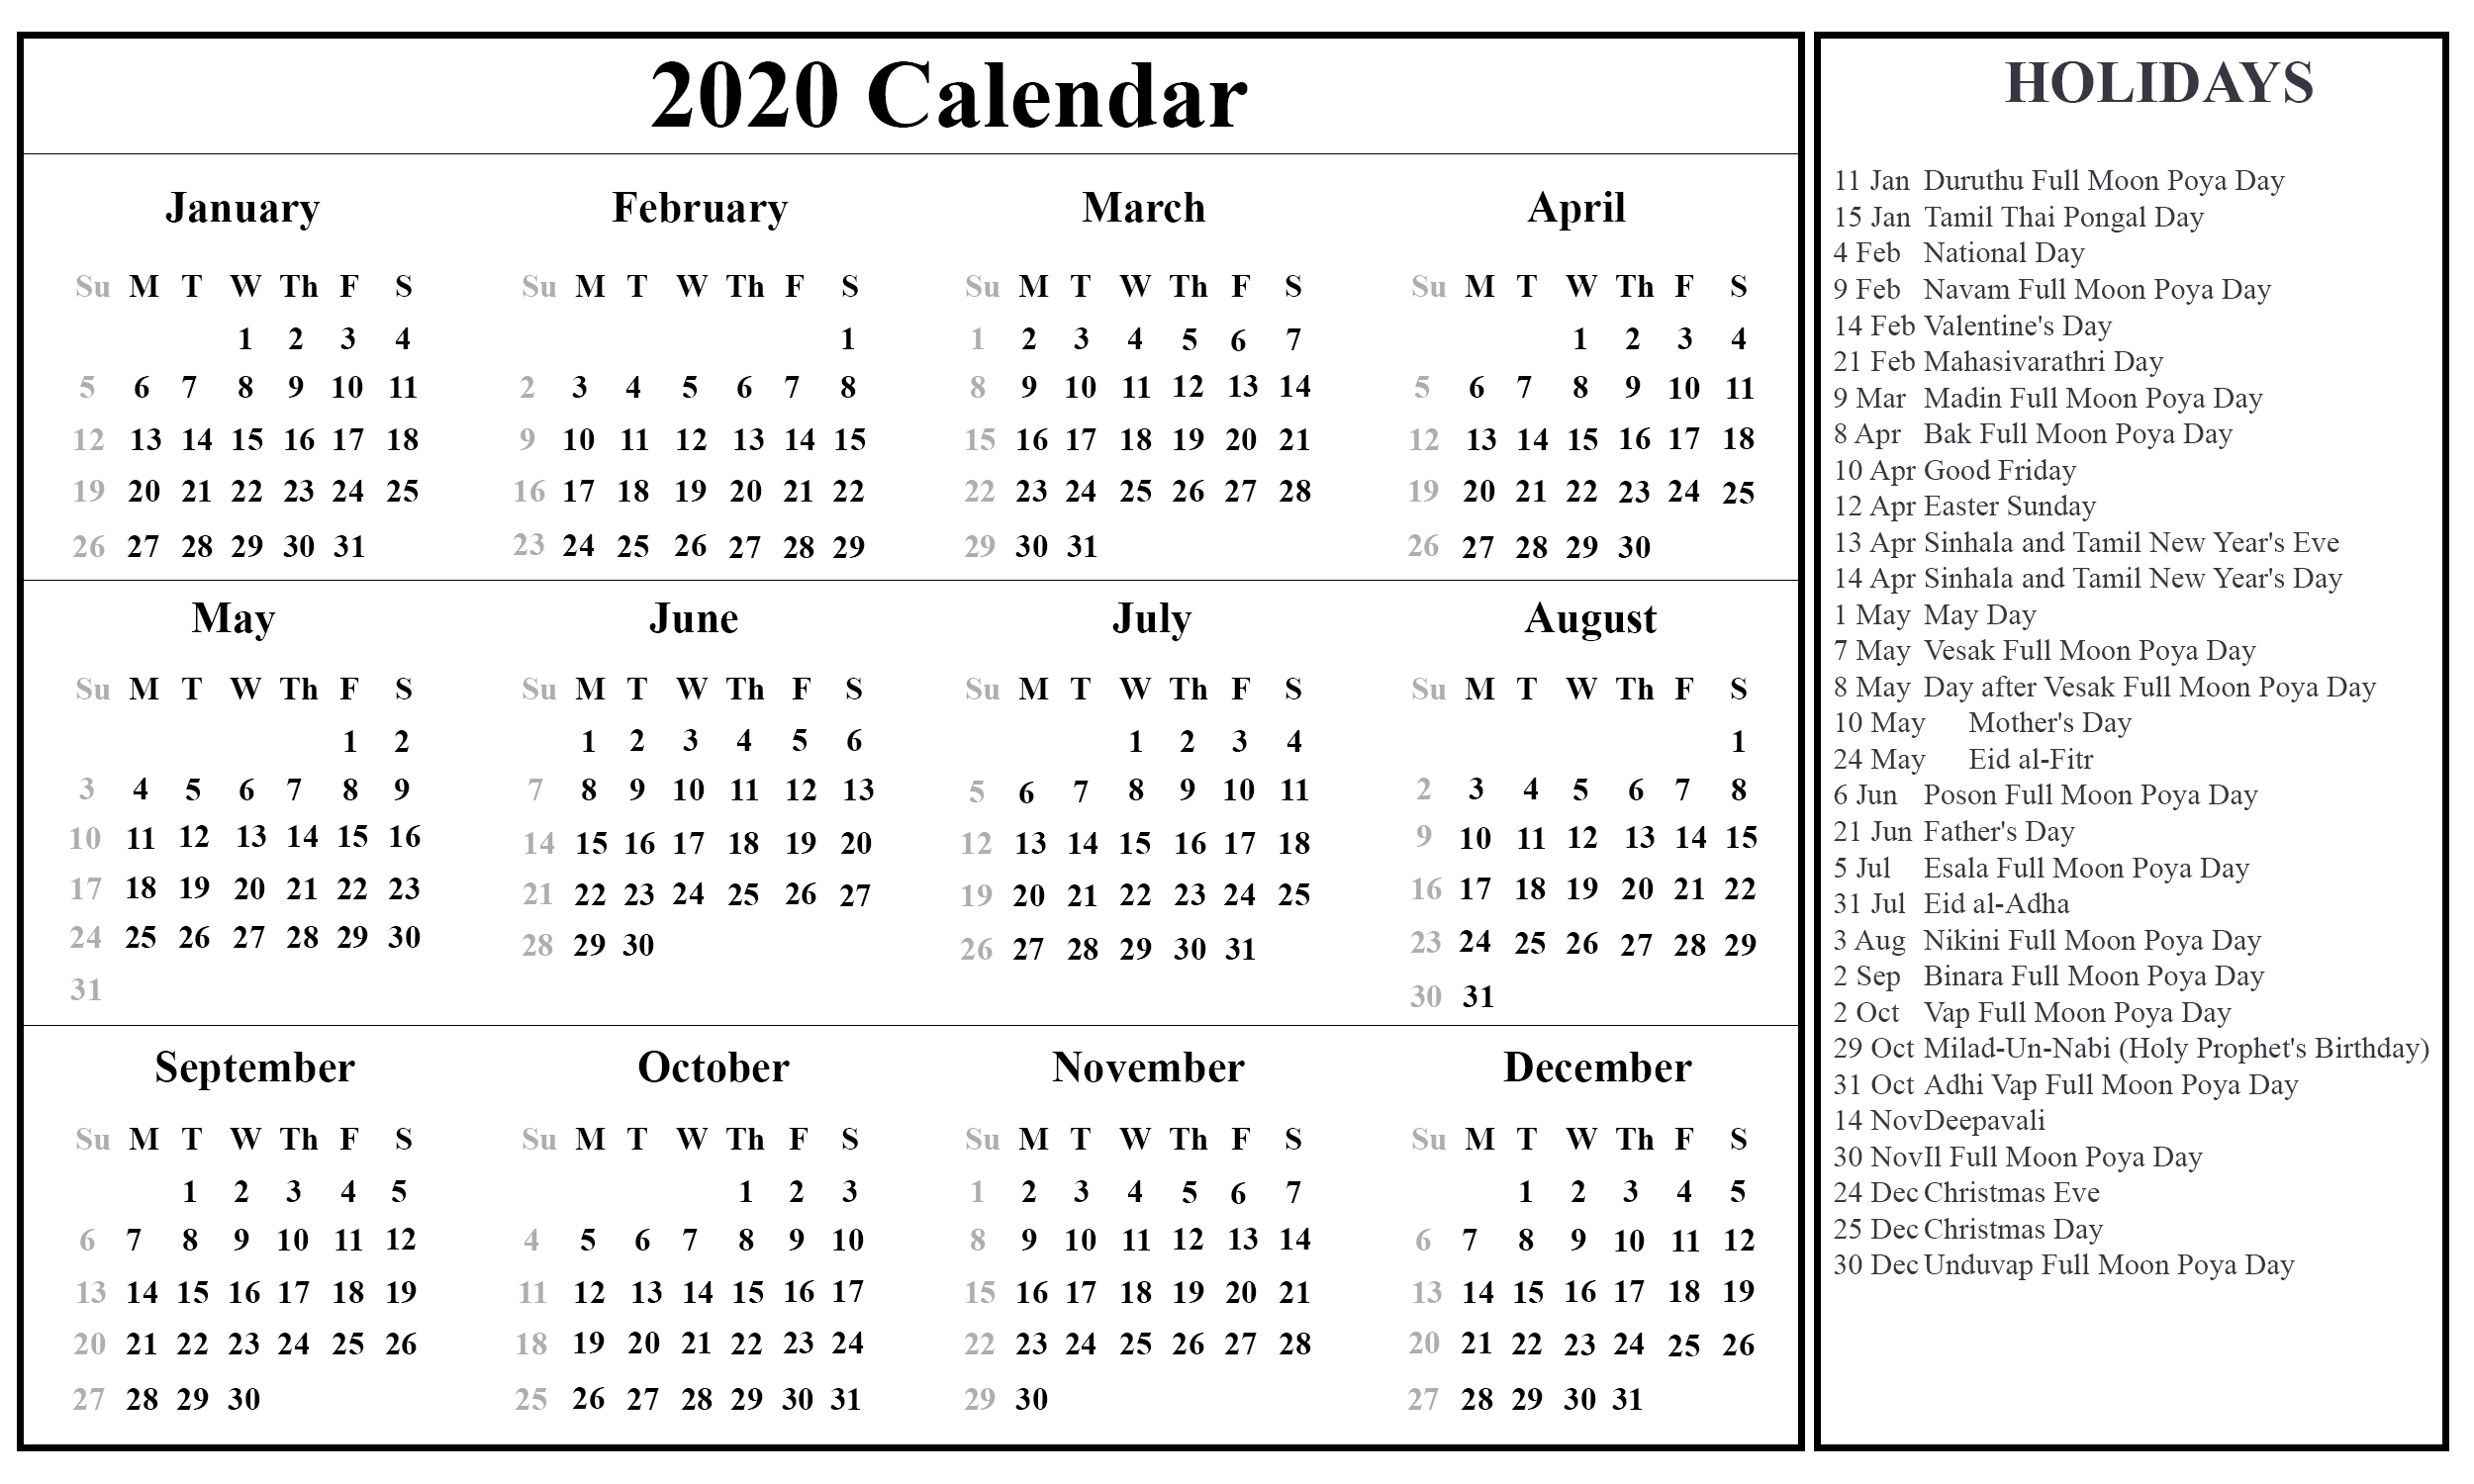 Free Printable Sri Lanka Calendar 2020 With Holidays In Pdf-2020 Calendar With Islamic Holidays